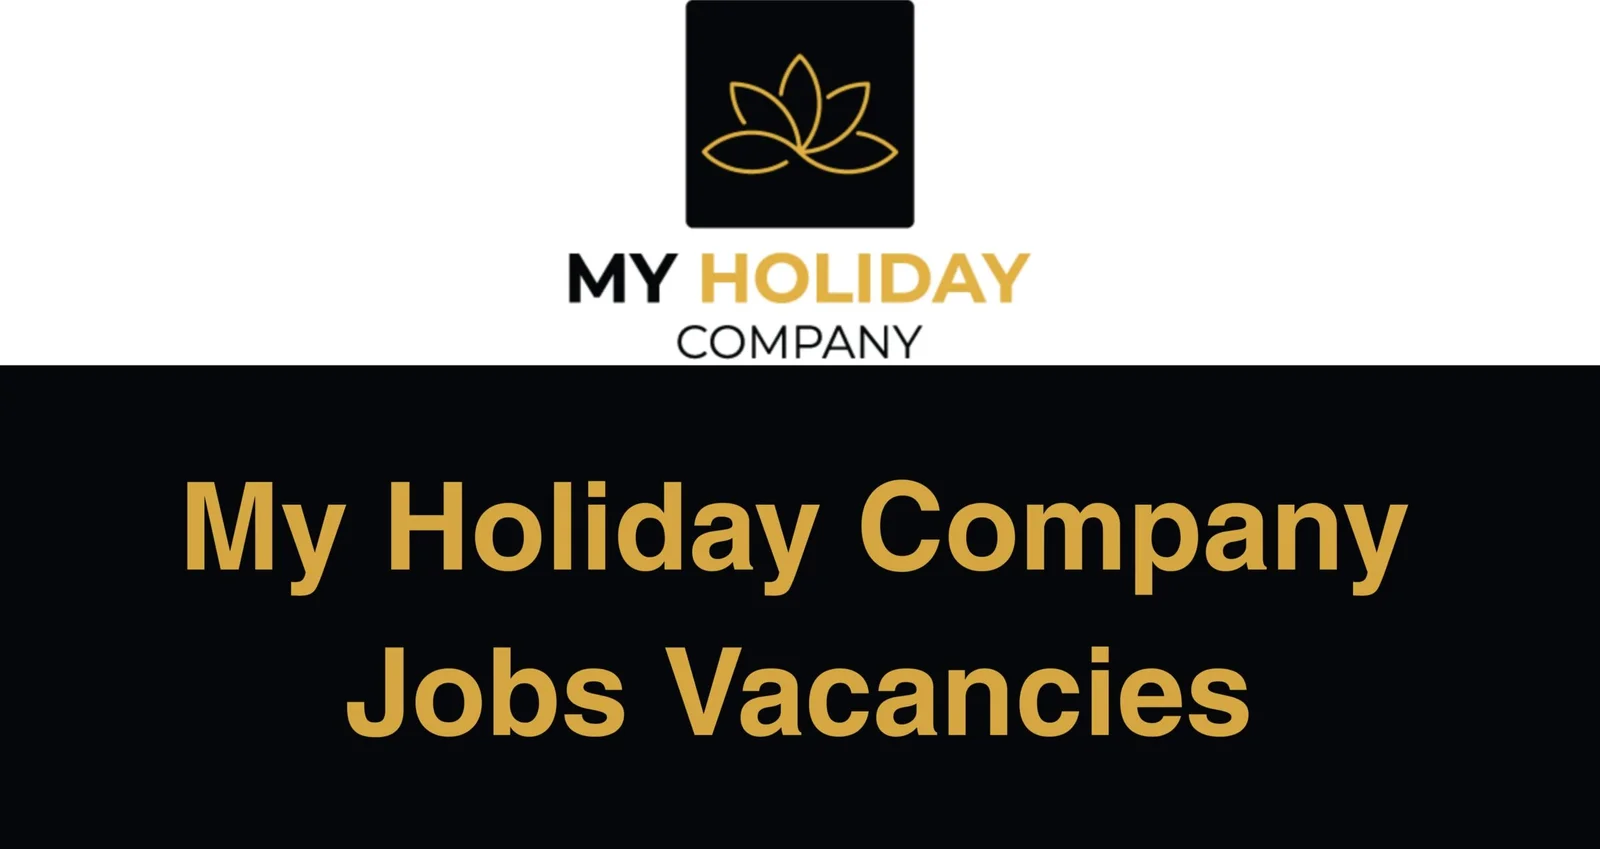 My Holiday Company Jobs Vacancies